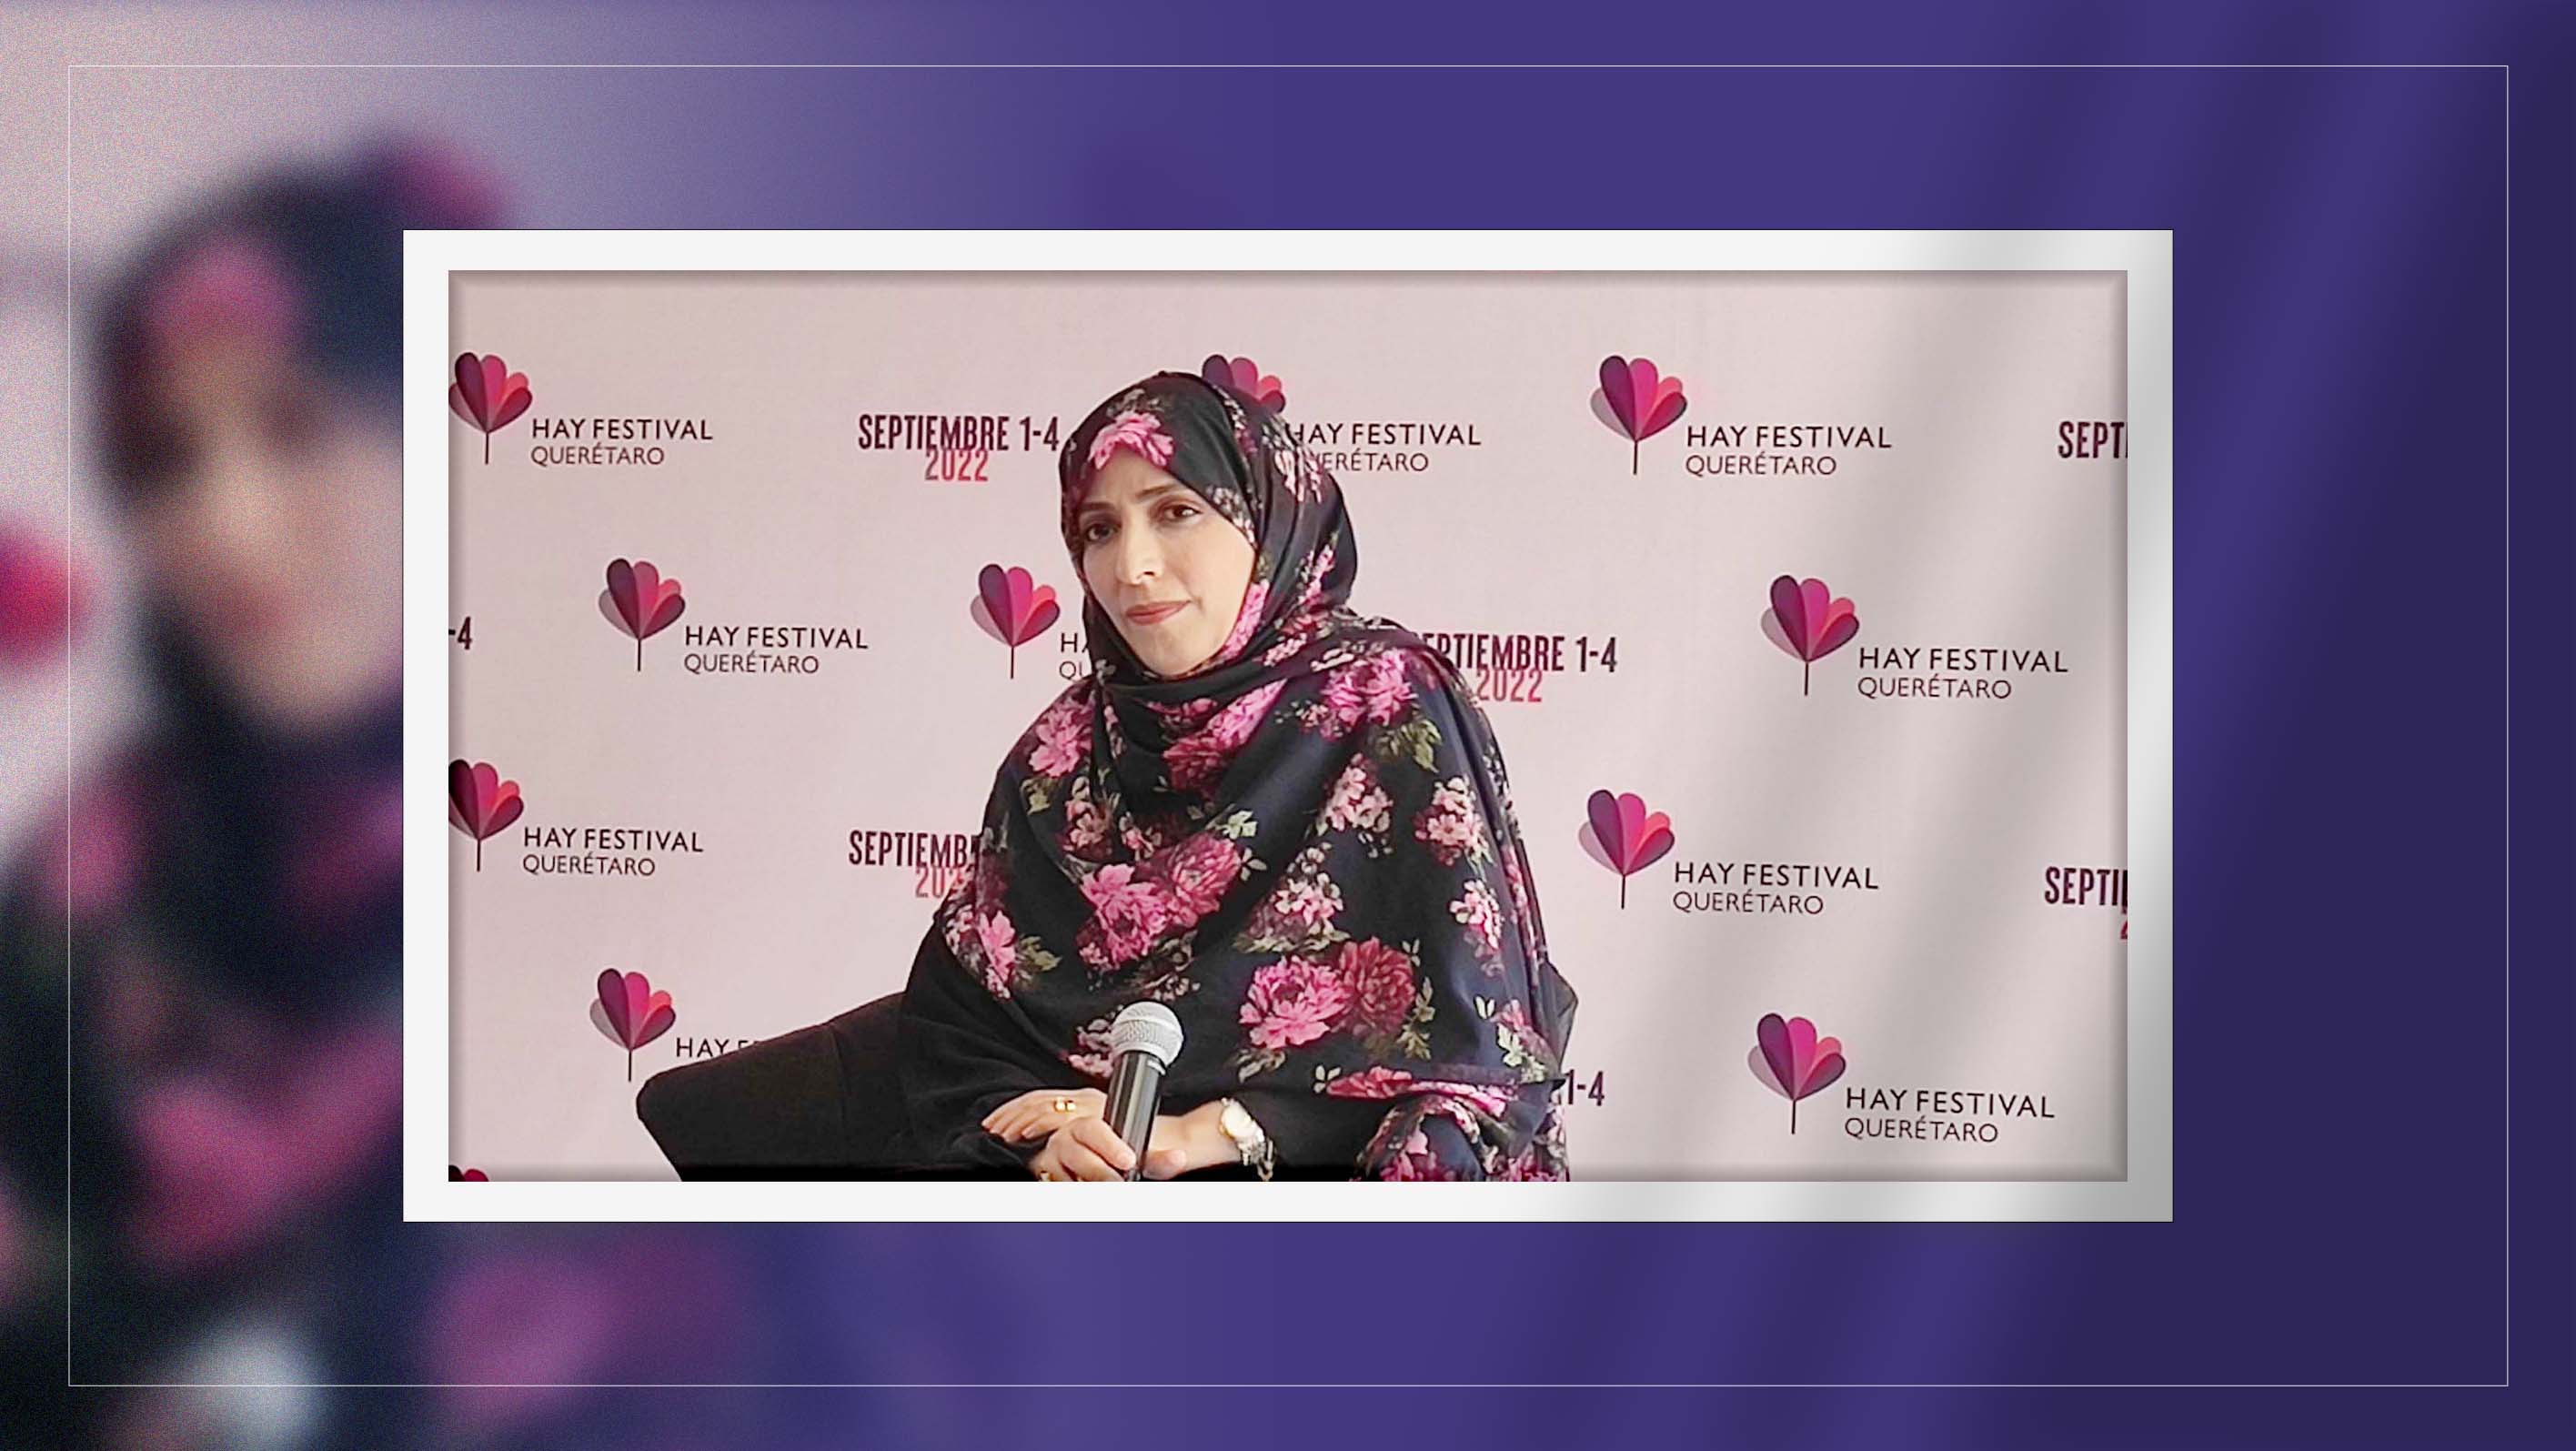 Tawakkol Karman holds press conference on sidelines of Queretaro Festival 2022